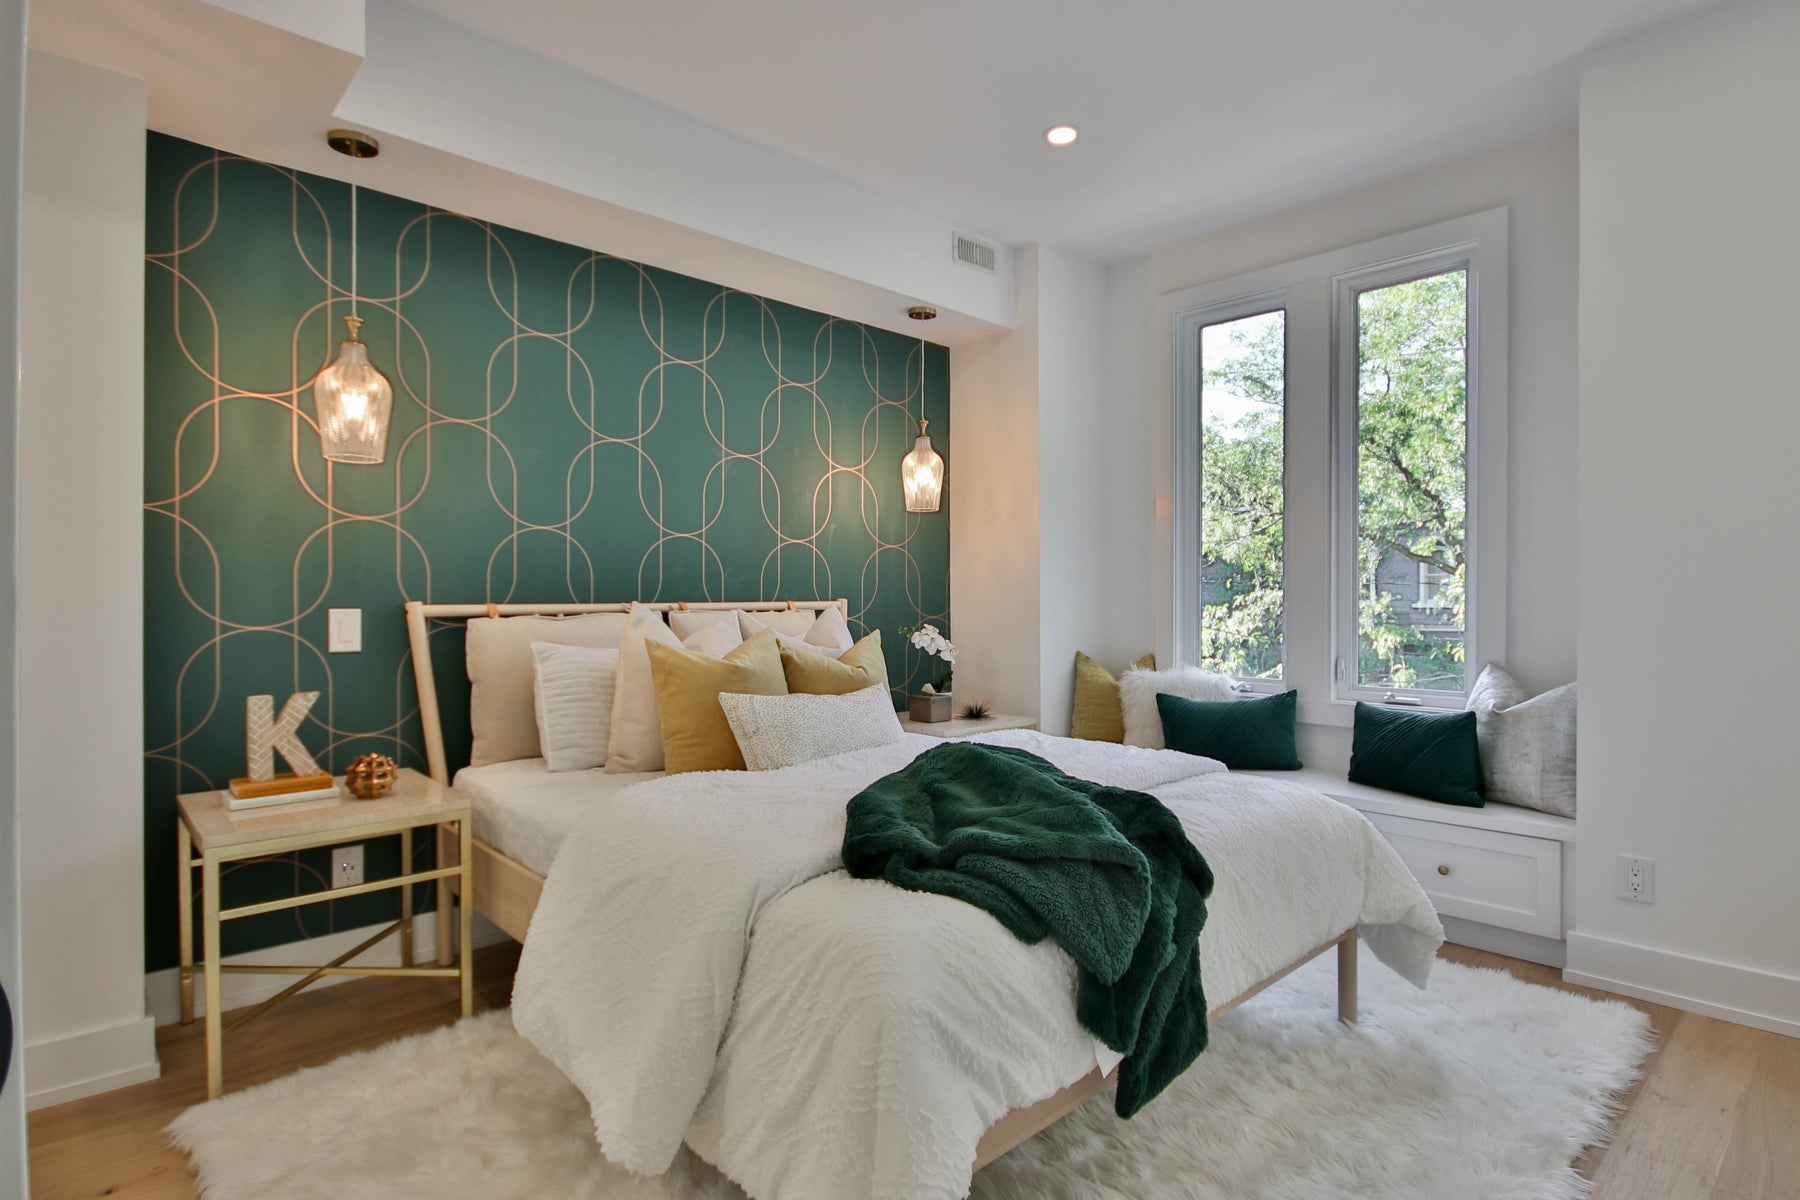 5 Best Modern PVC Wall Panel Design for Bedroom in 2023